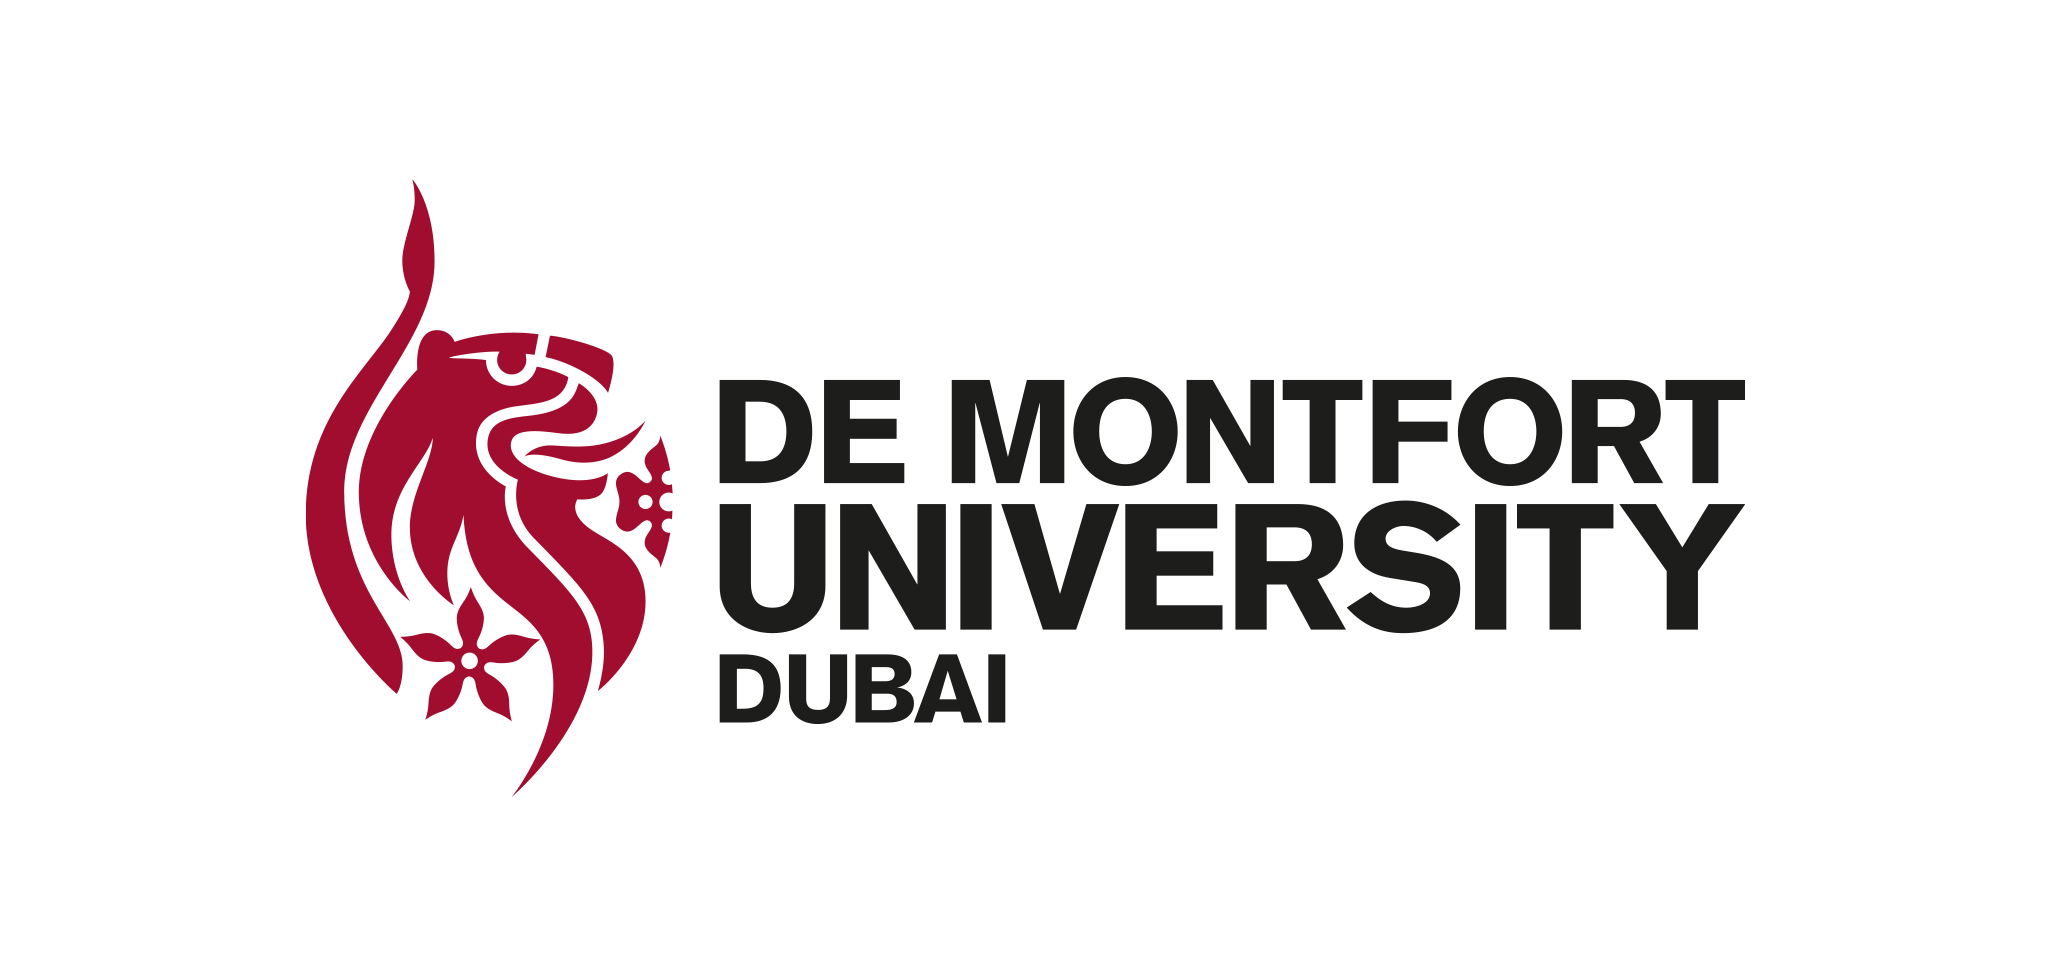 DMU Dubai master logo